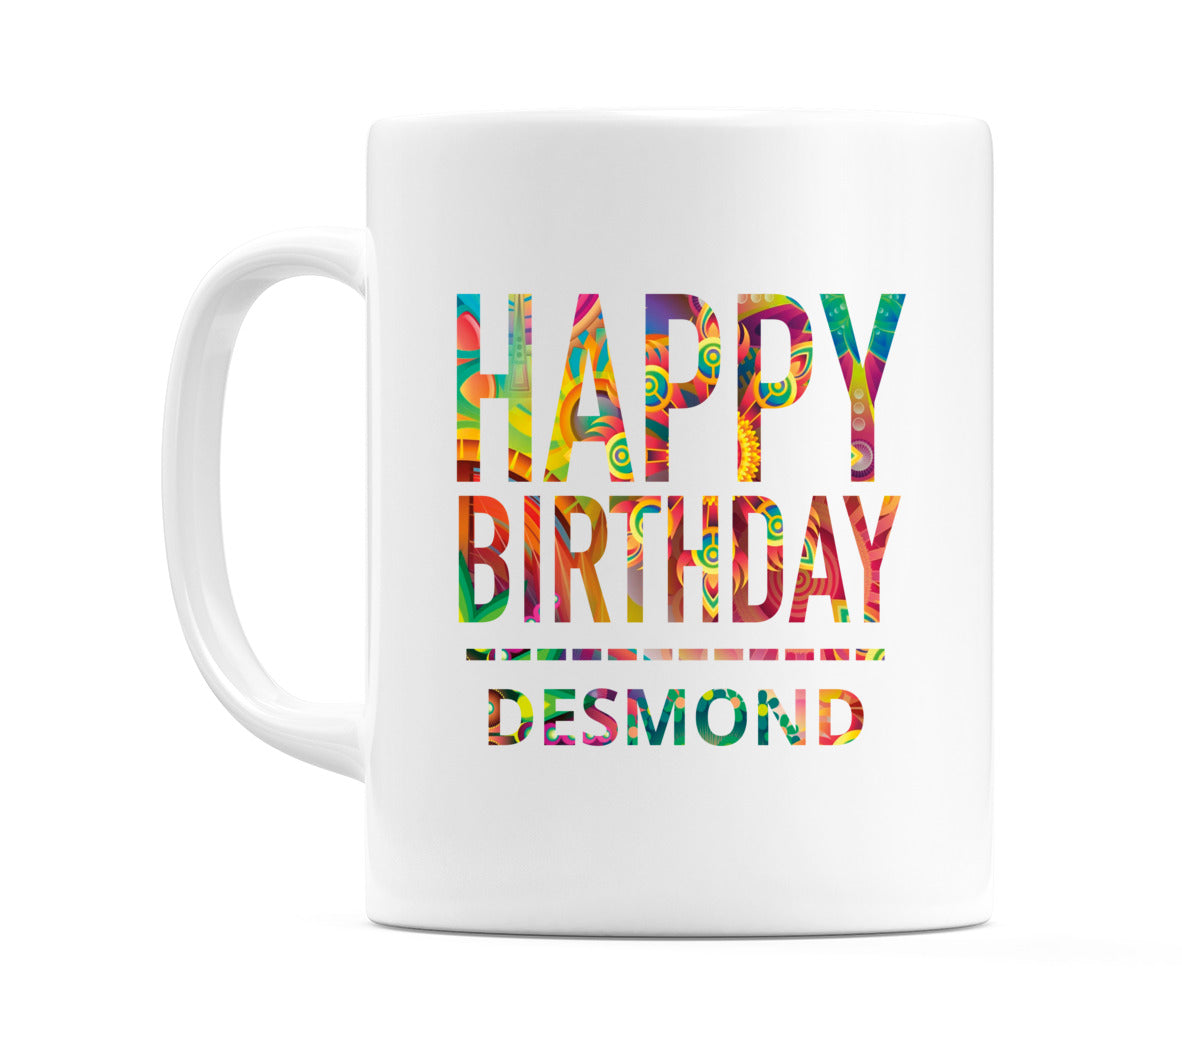 Happy Birthday Desmond (Tie Dye Effect) Mug Cup by WeDoMugs